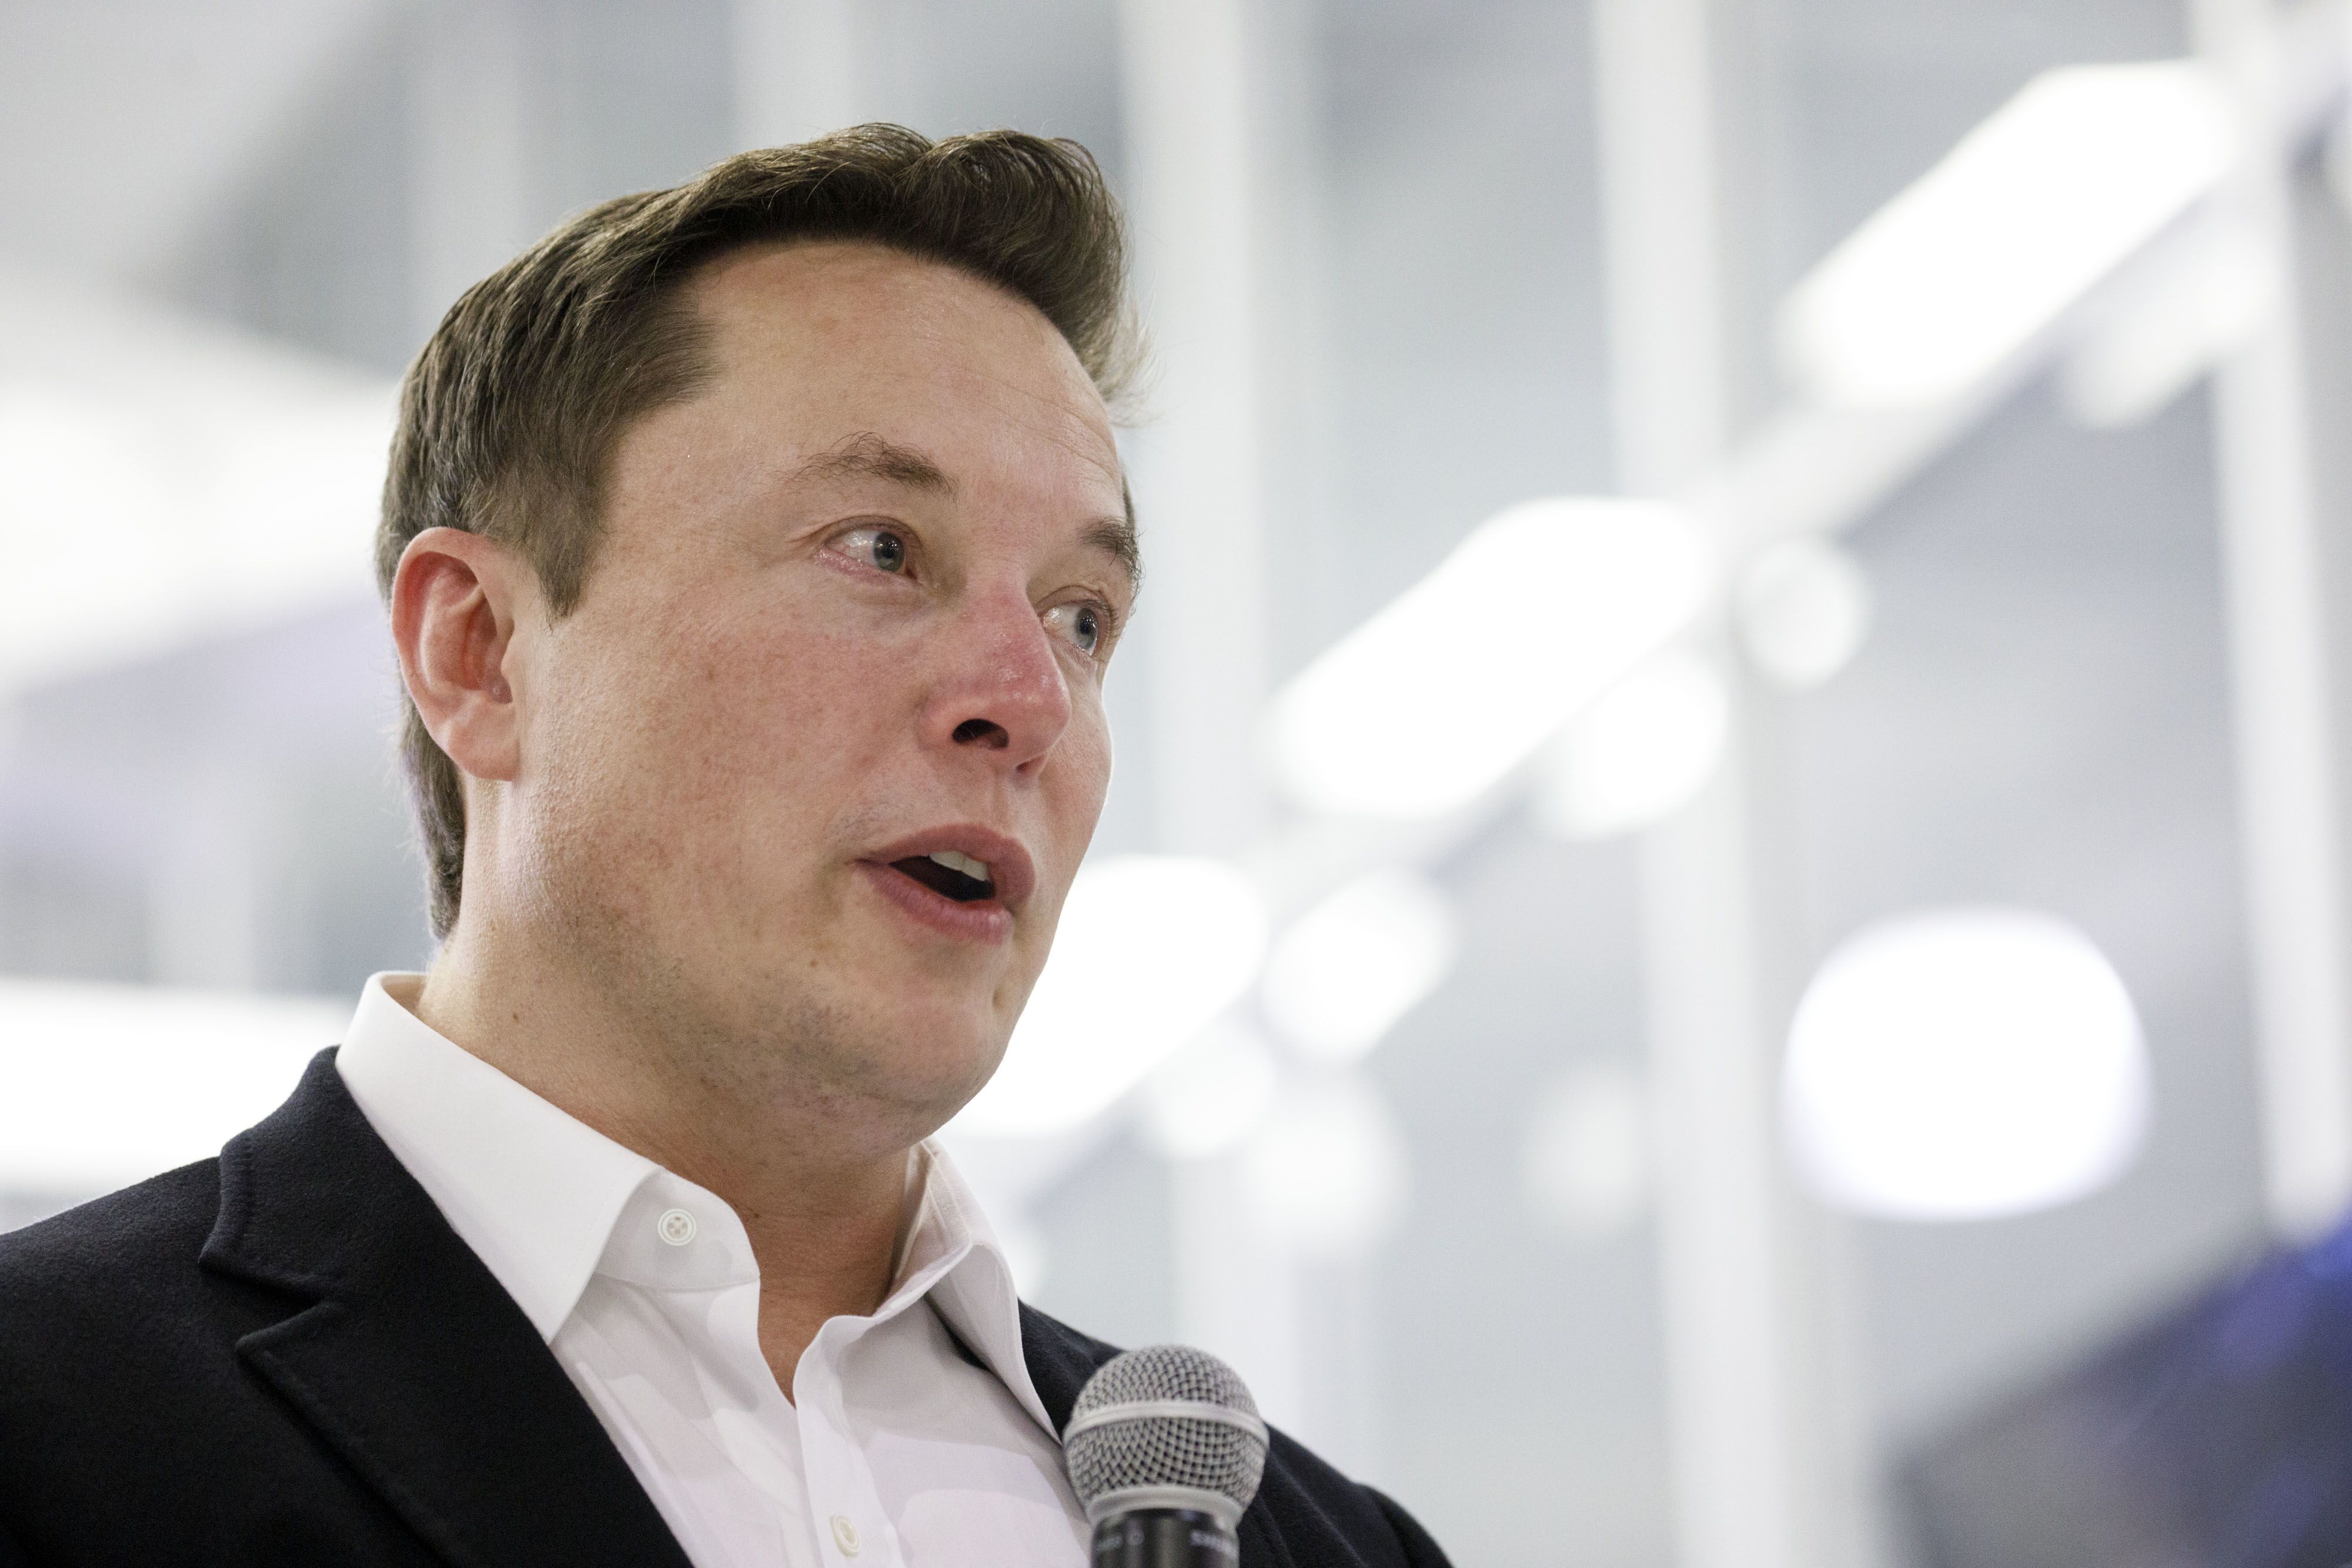 Como vai acabar? Twitter leva Elon Musk a tribunal para obrigar a compra